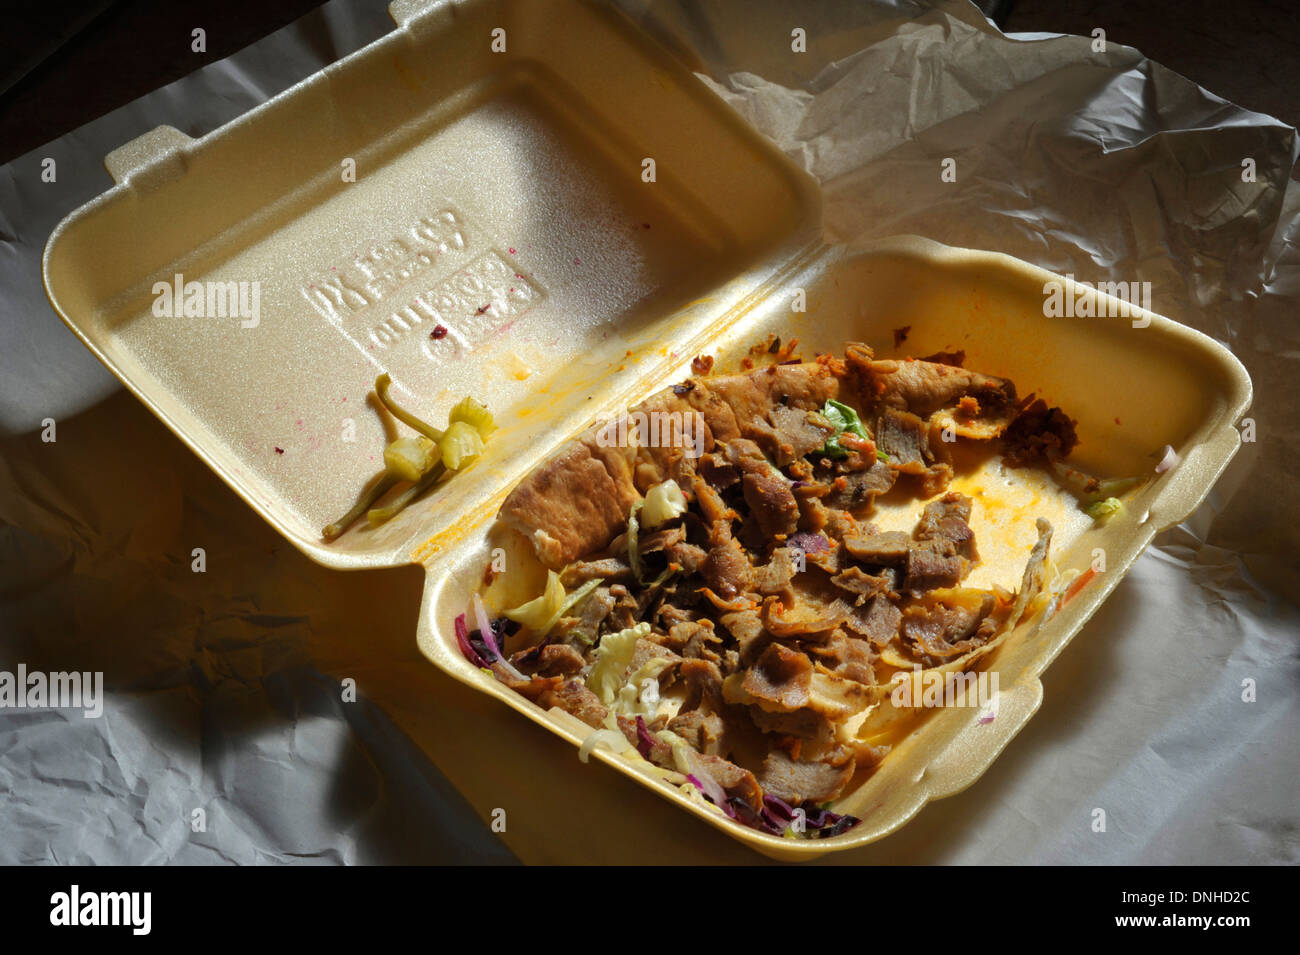 Leftover doner kebab takeaway. Stock Photo